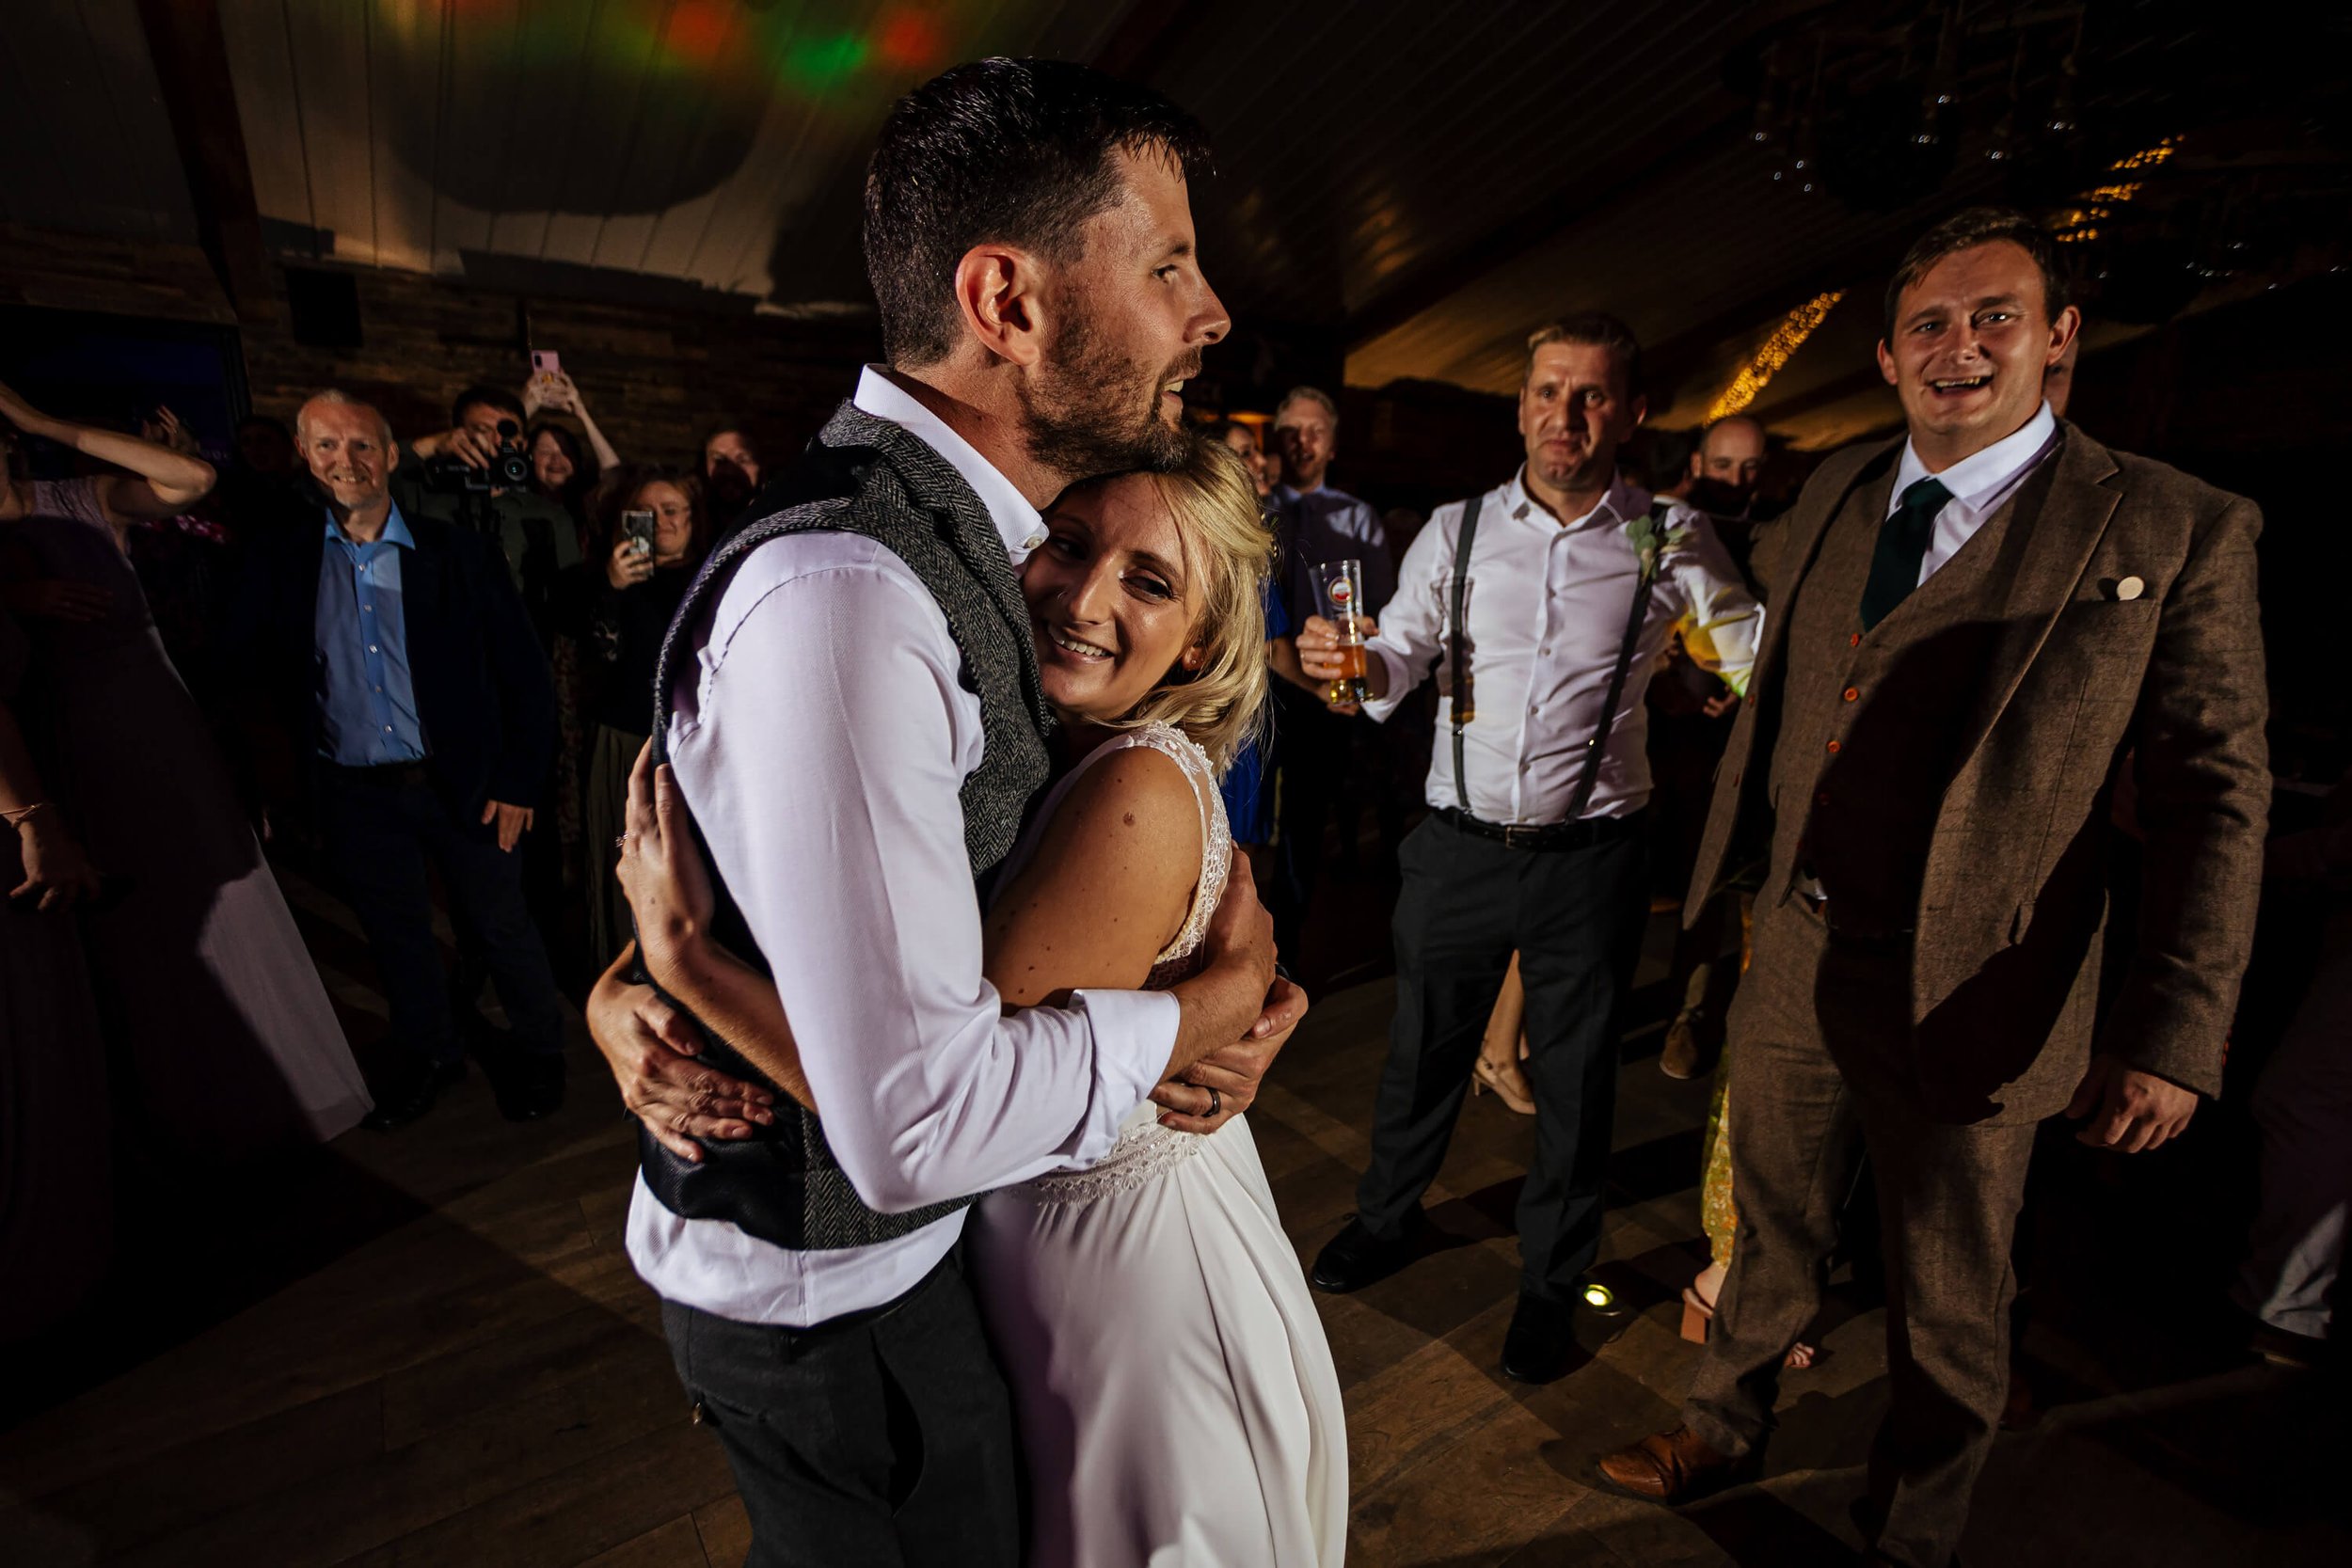 Bride and groom share a hug on the dance floor